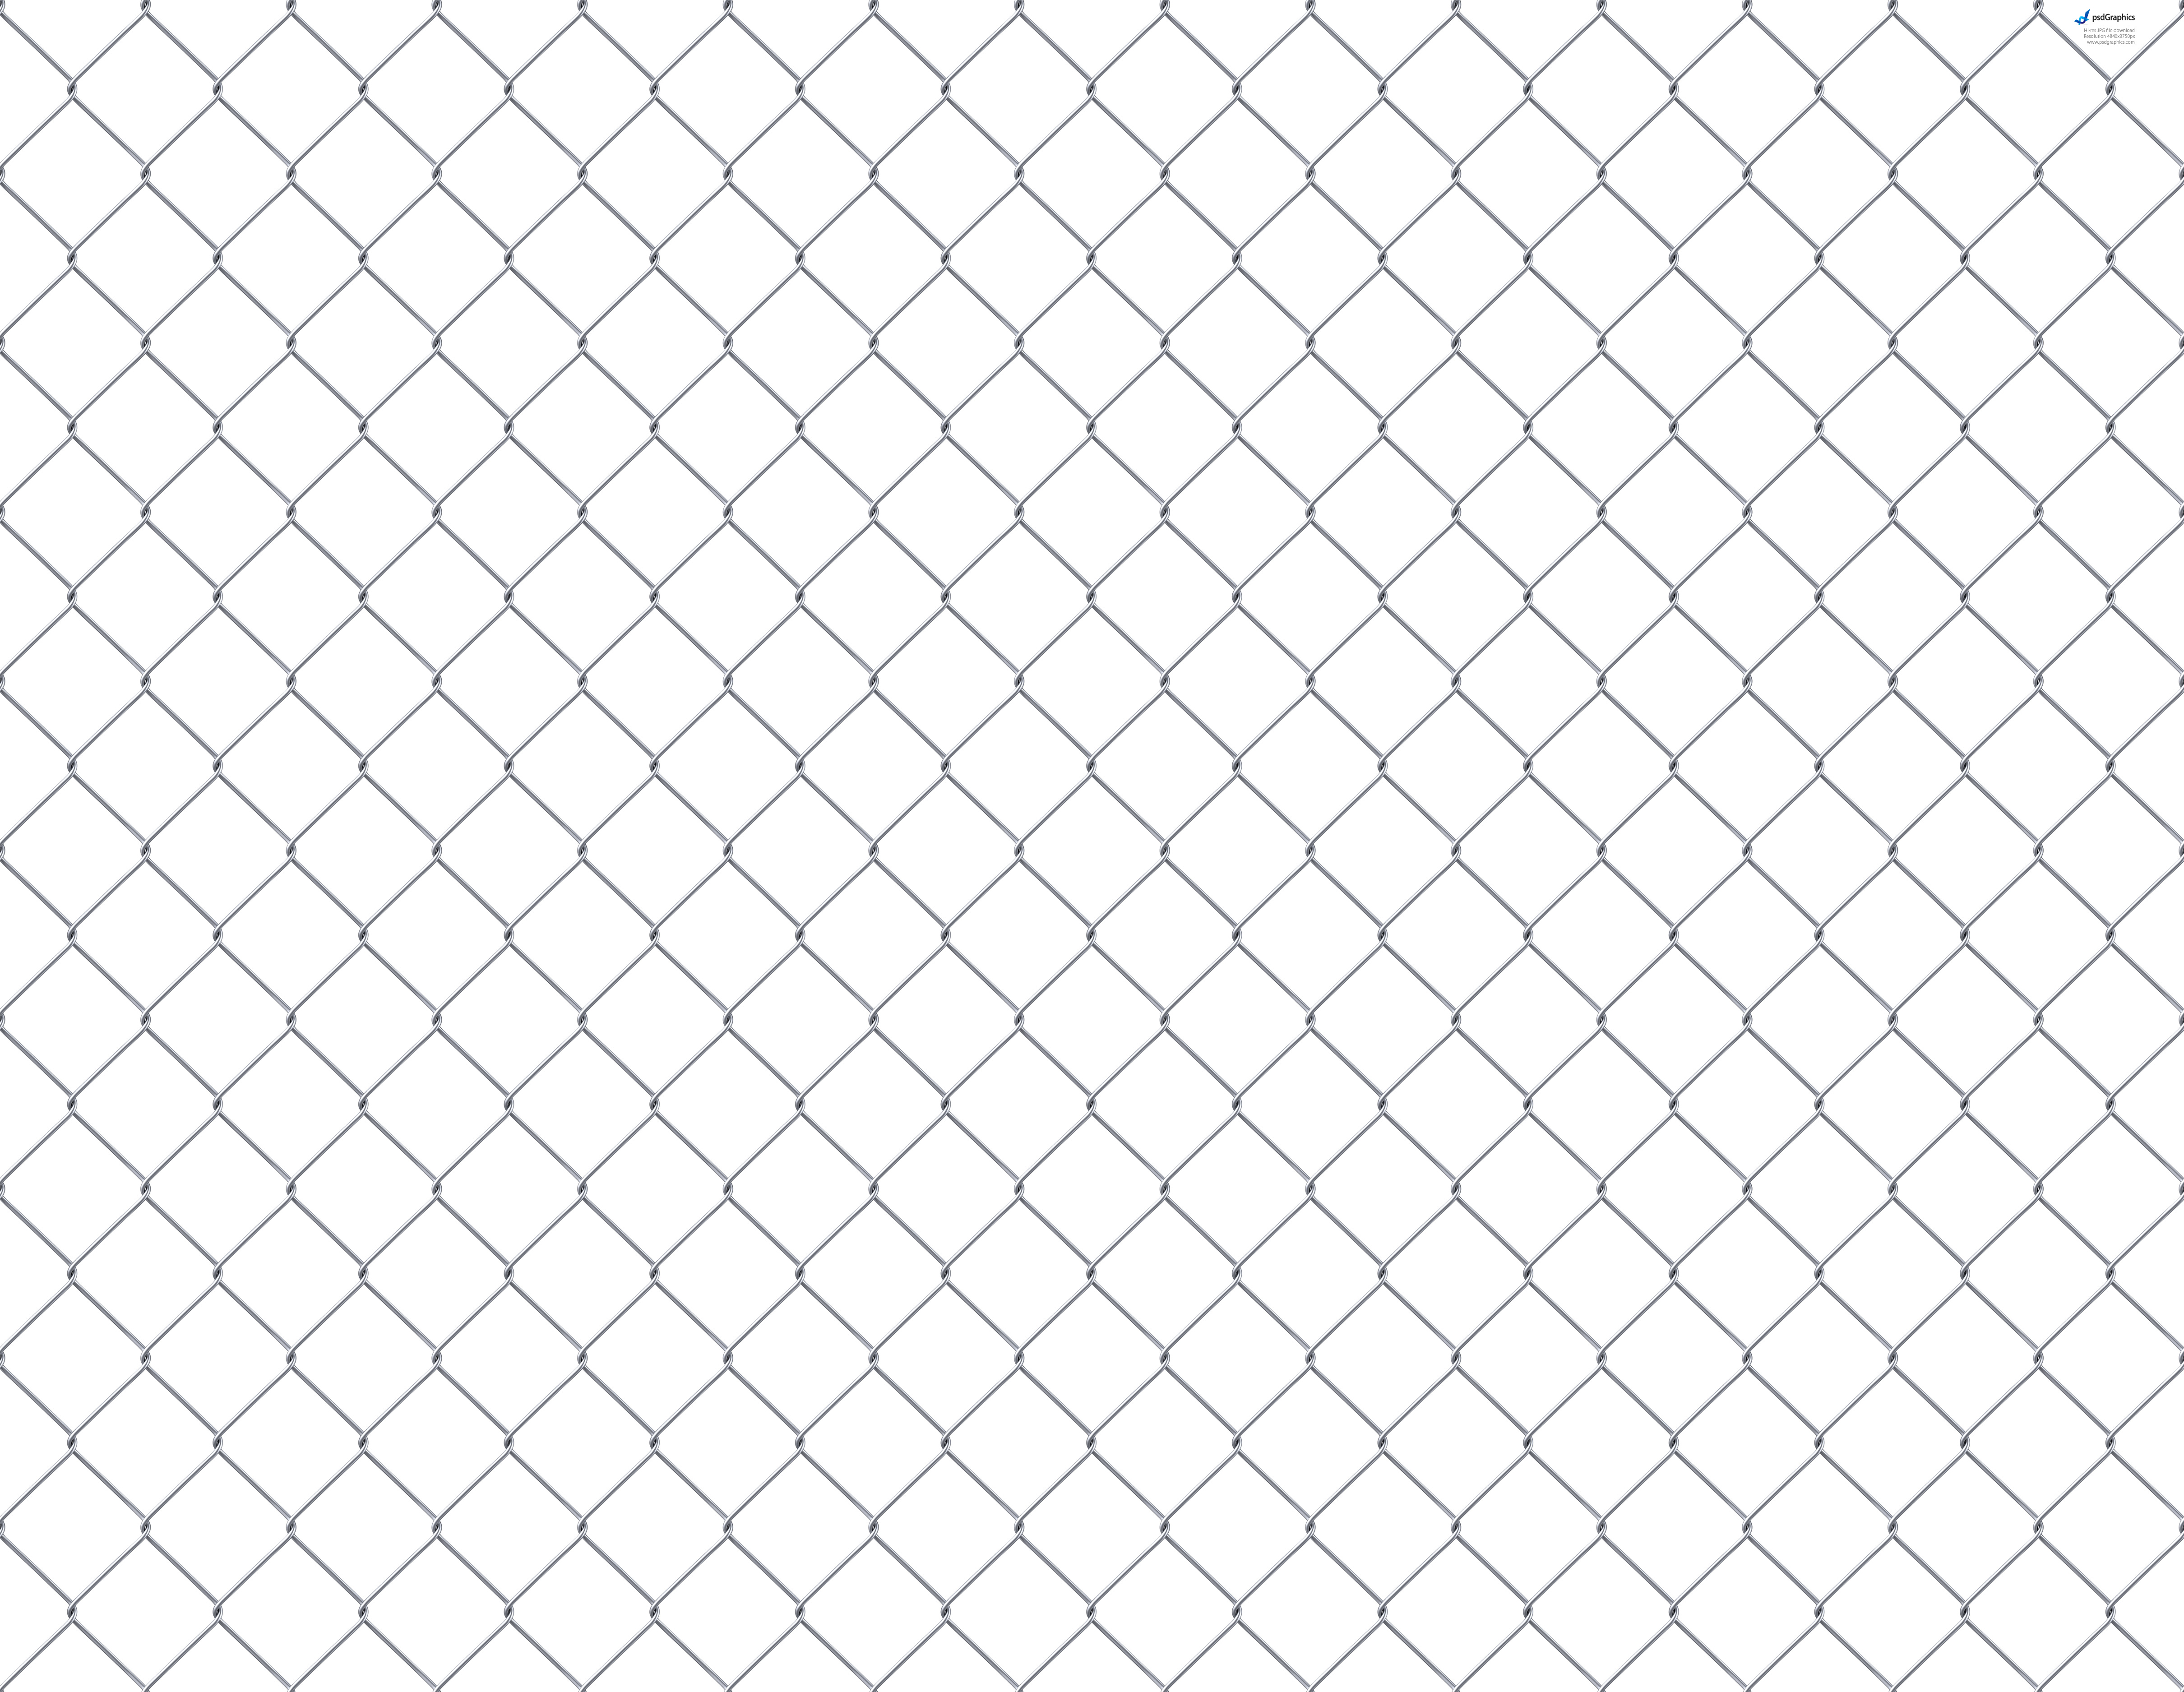 Chainlink Fence Texture   Psdgraphics